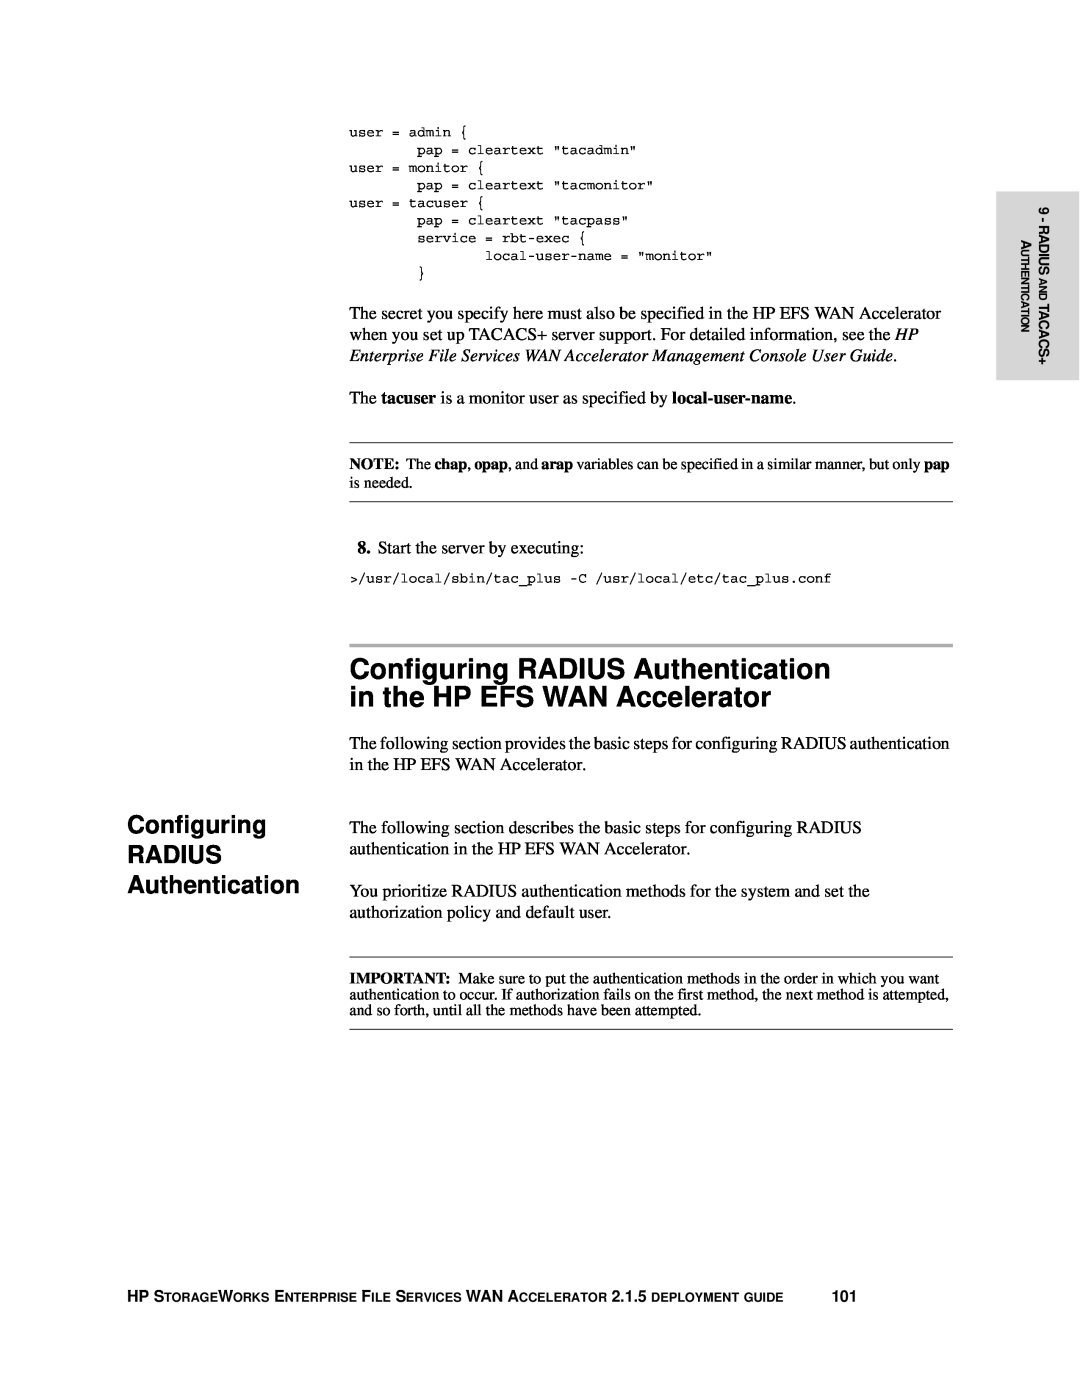 HP Enterprise File Services WAN Accelerator manual Configuring RADIUS Authentication in the HP EFS WAN Accelerator 